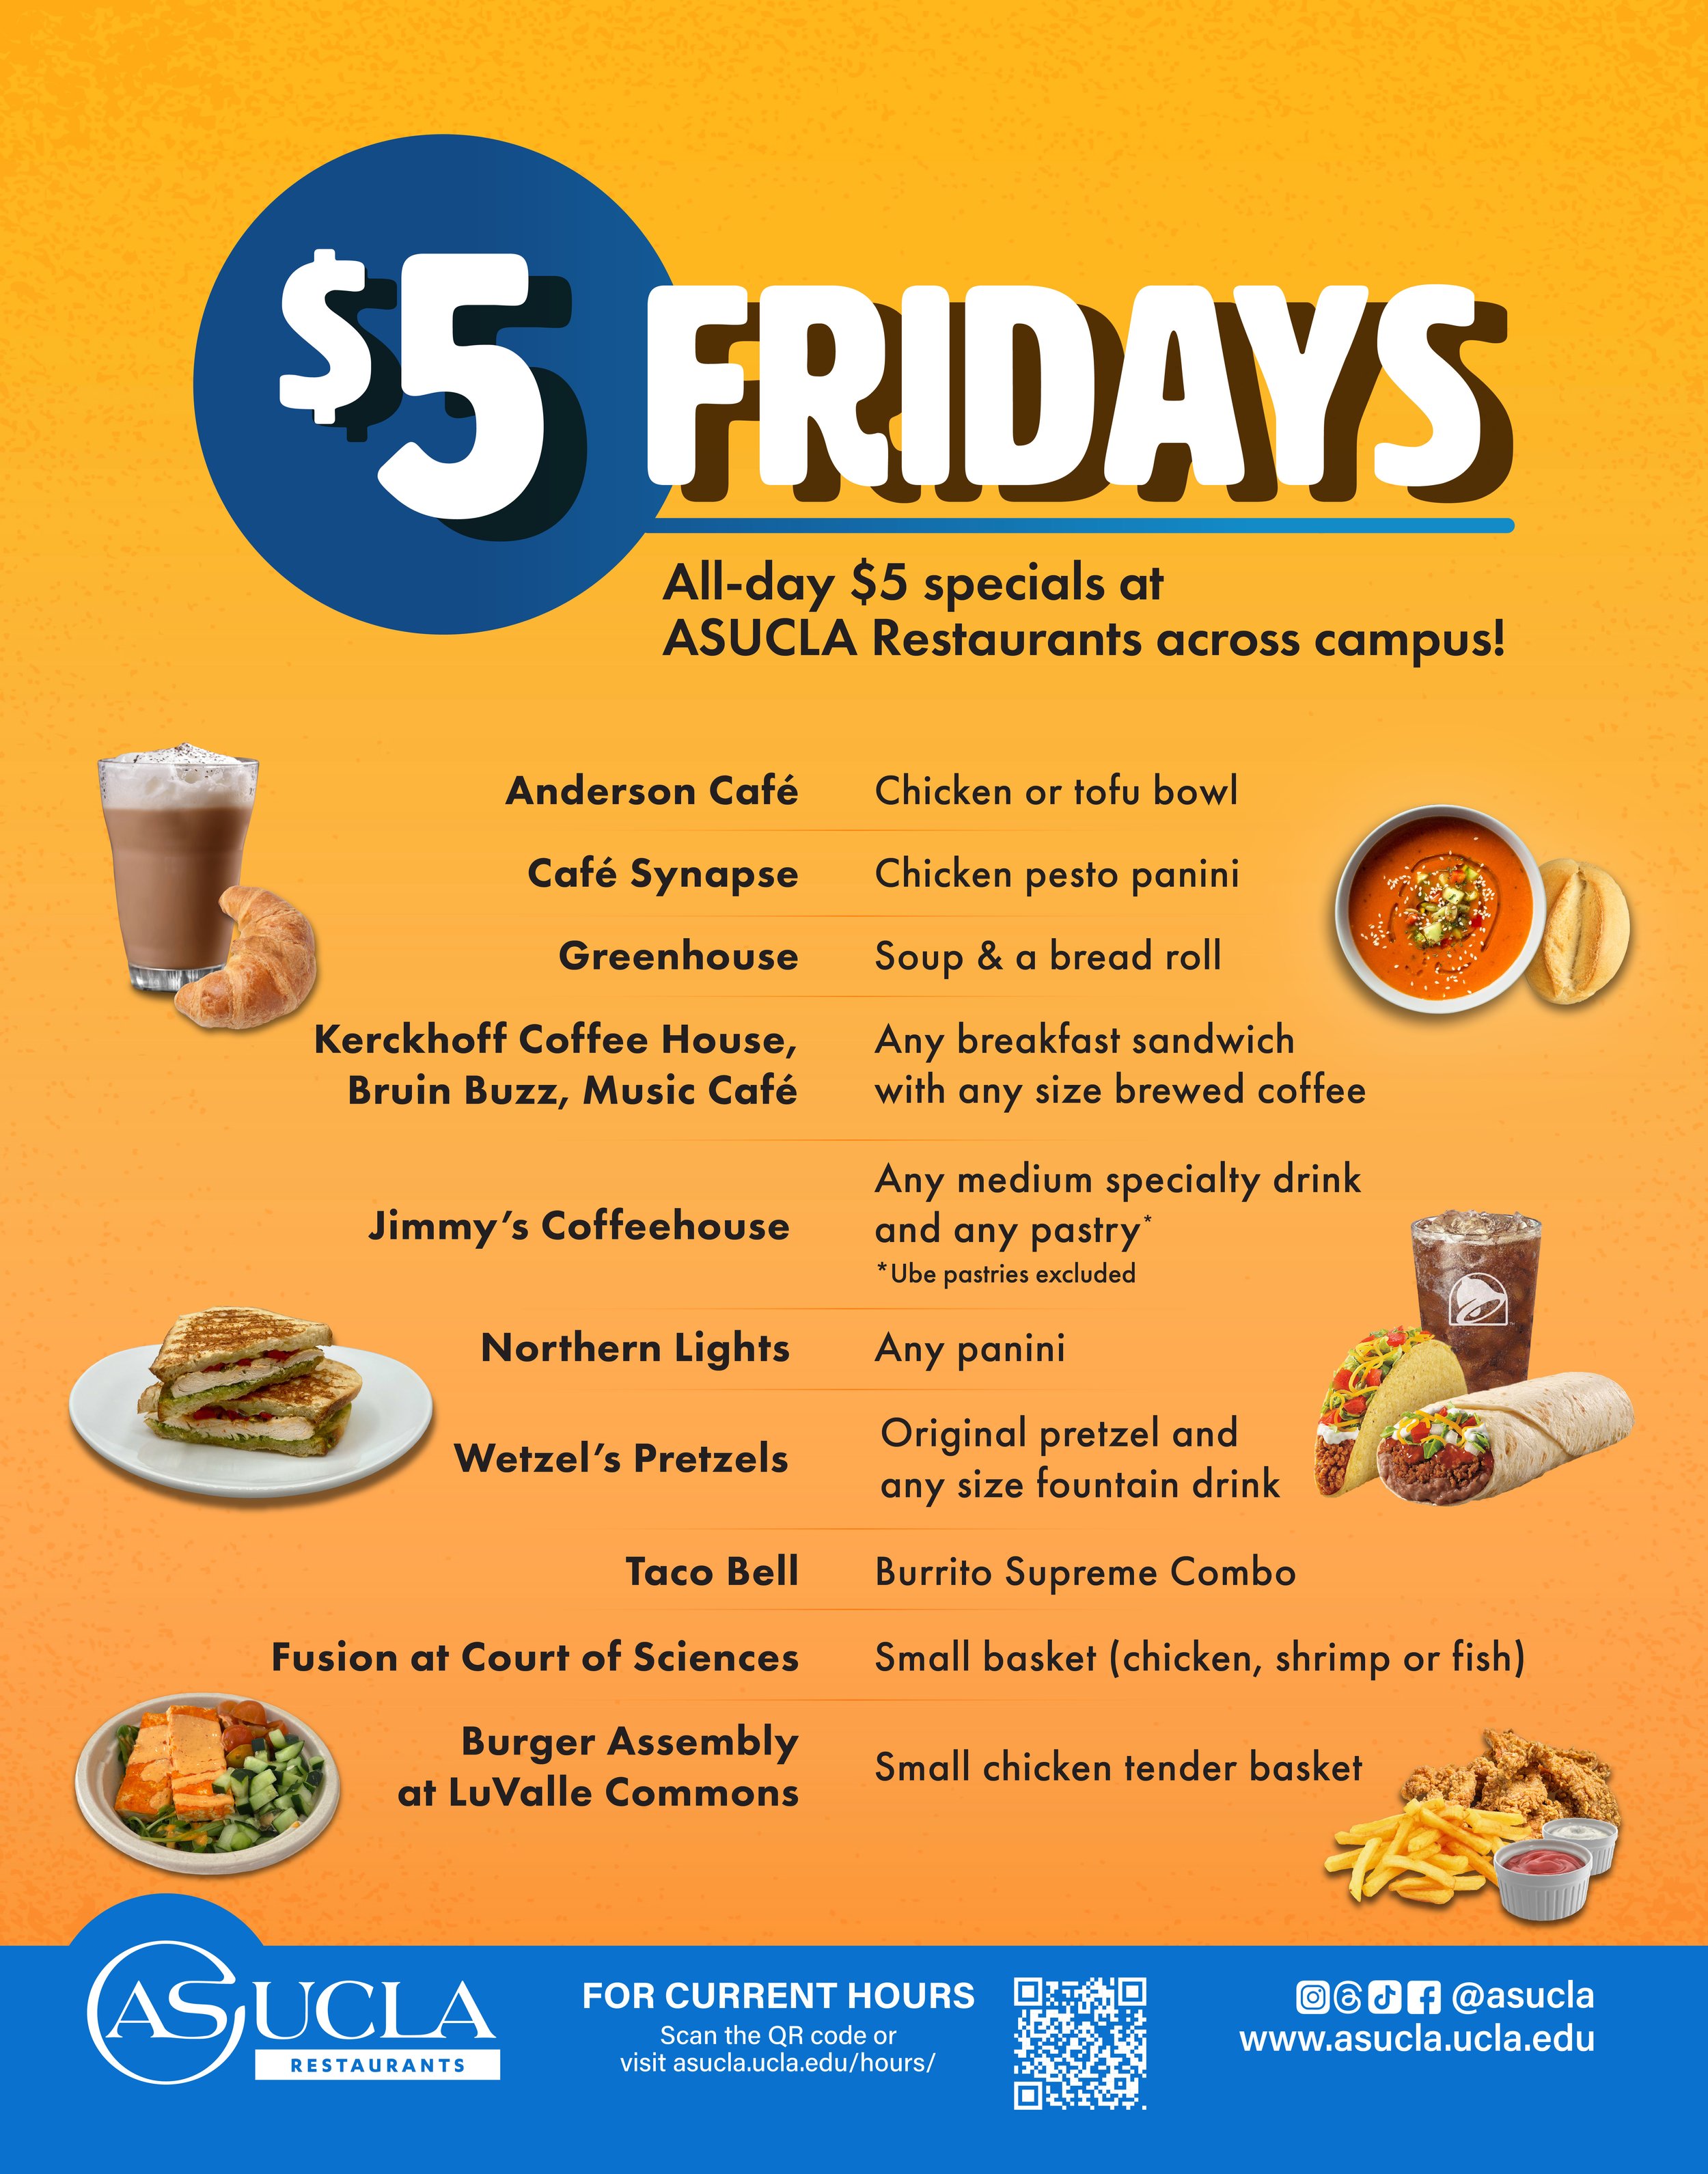 $5 Fridays offers meal deals at ASUCLA Restaurants once again — ASUCLA